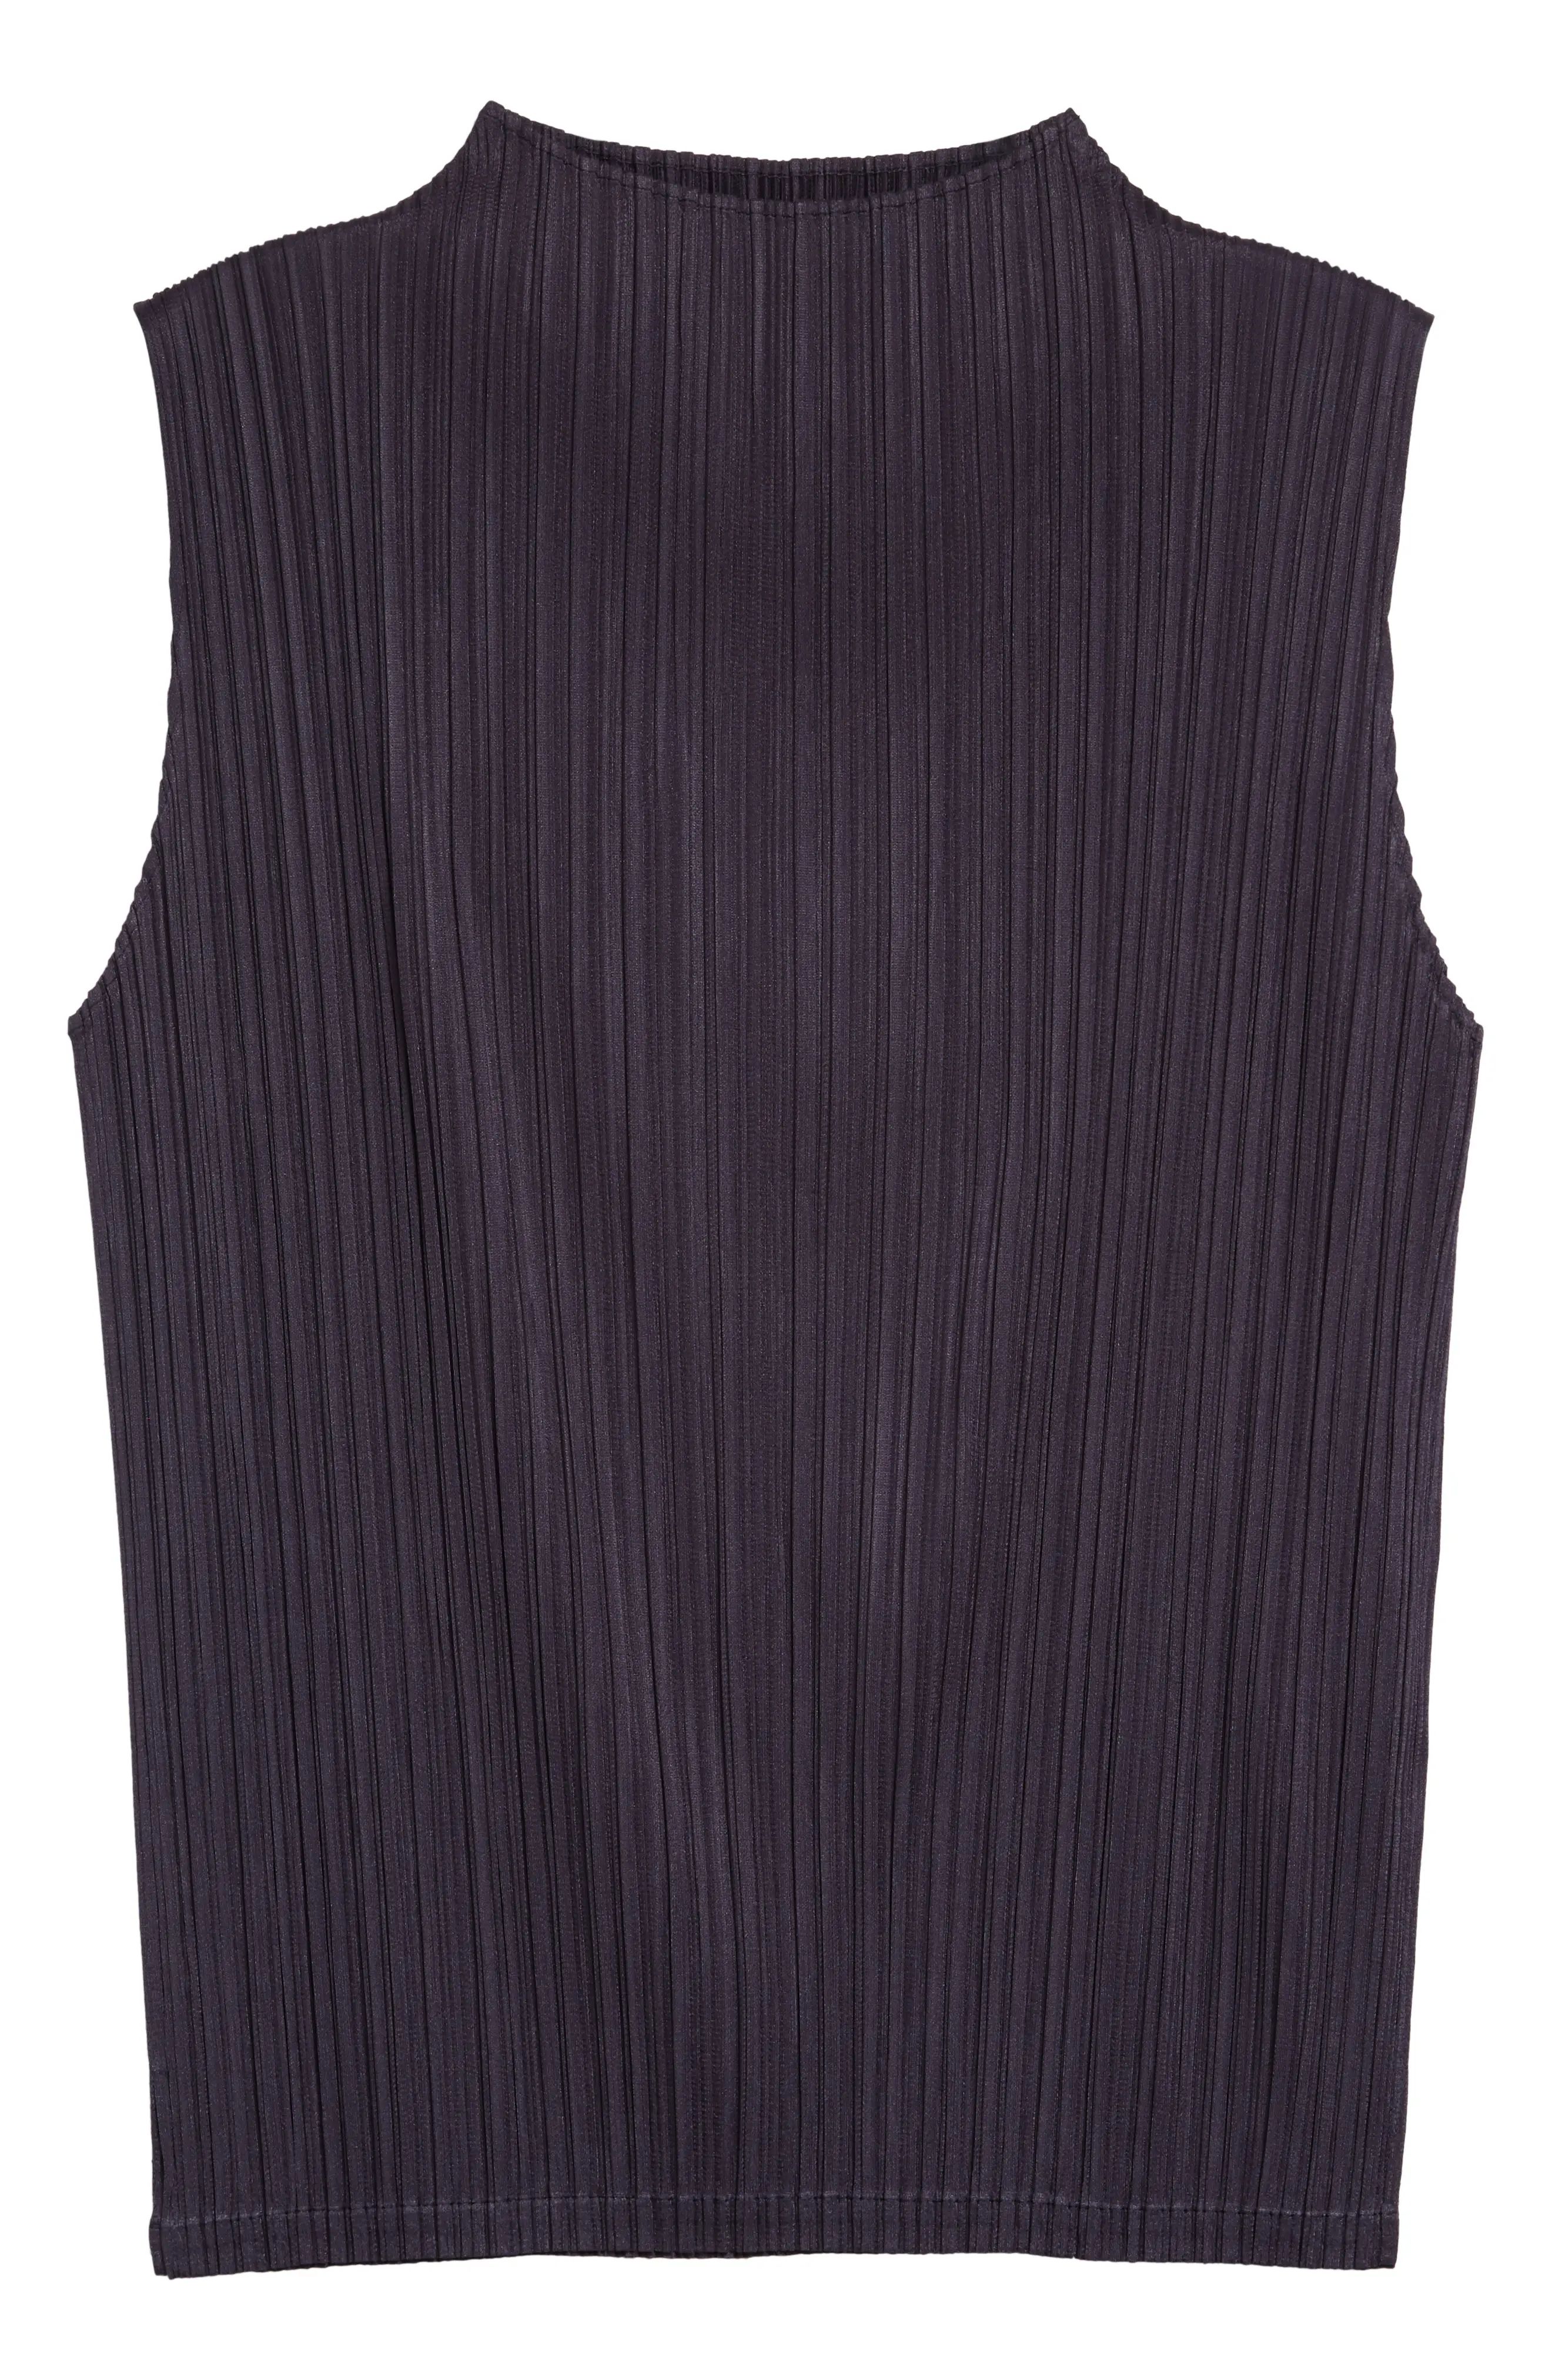 Women's Pleats Please Issey Miyake Funnel Neck Top, Size 5 - Grey | Nordstrom